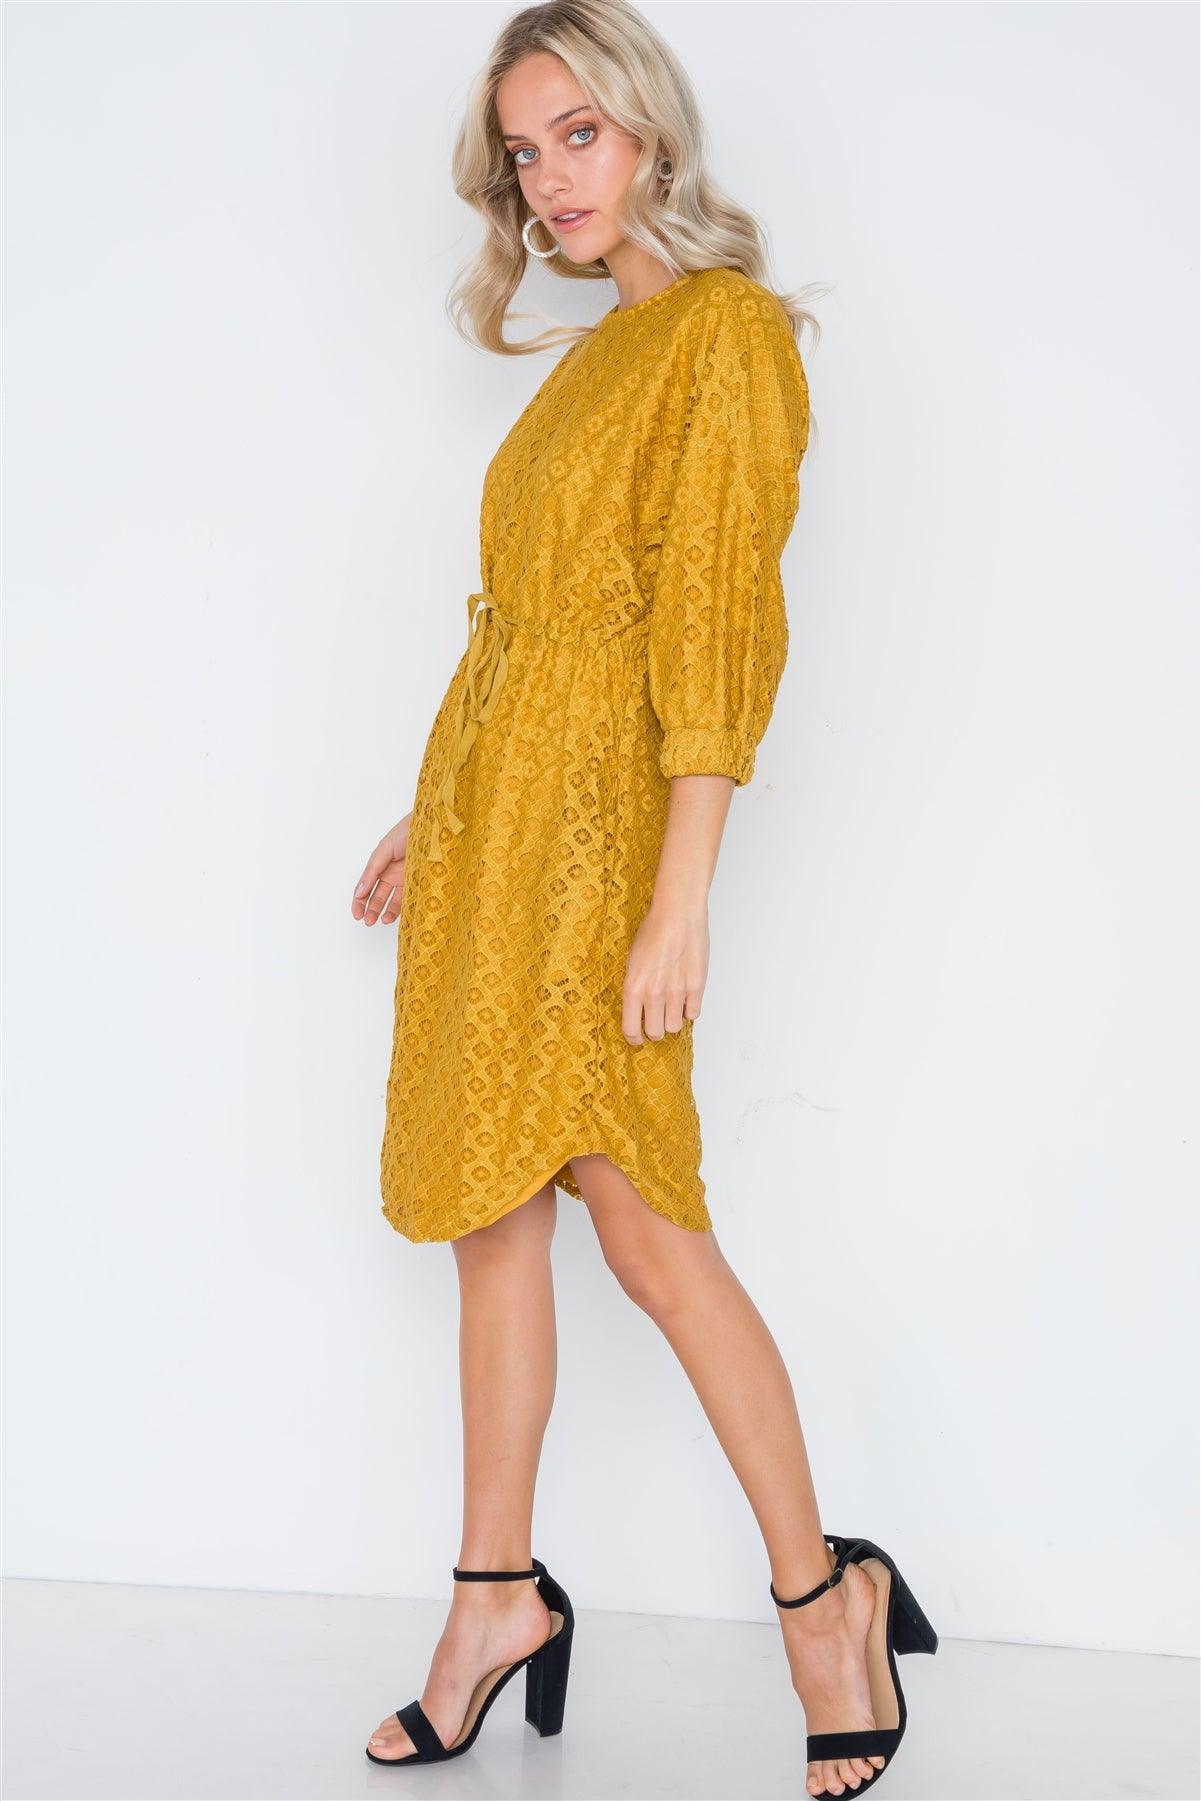 Mustard 3/4 Sleeve Patterned Lace Shift Dress /3-2-1